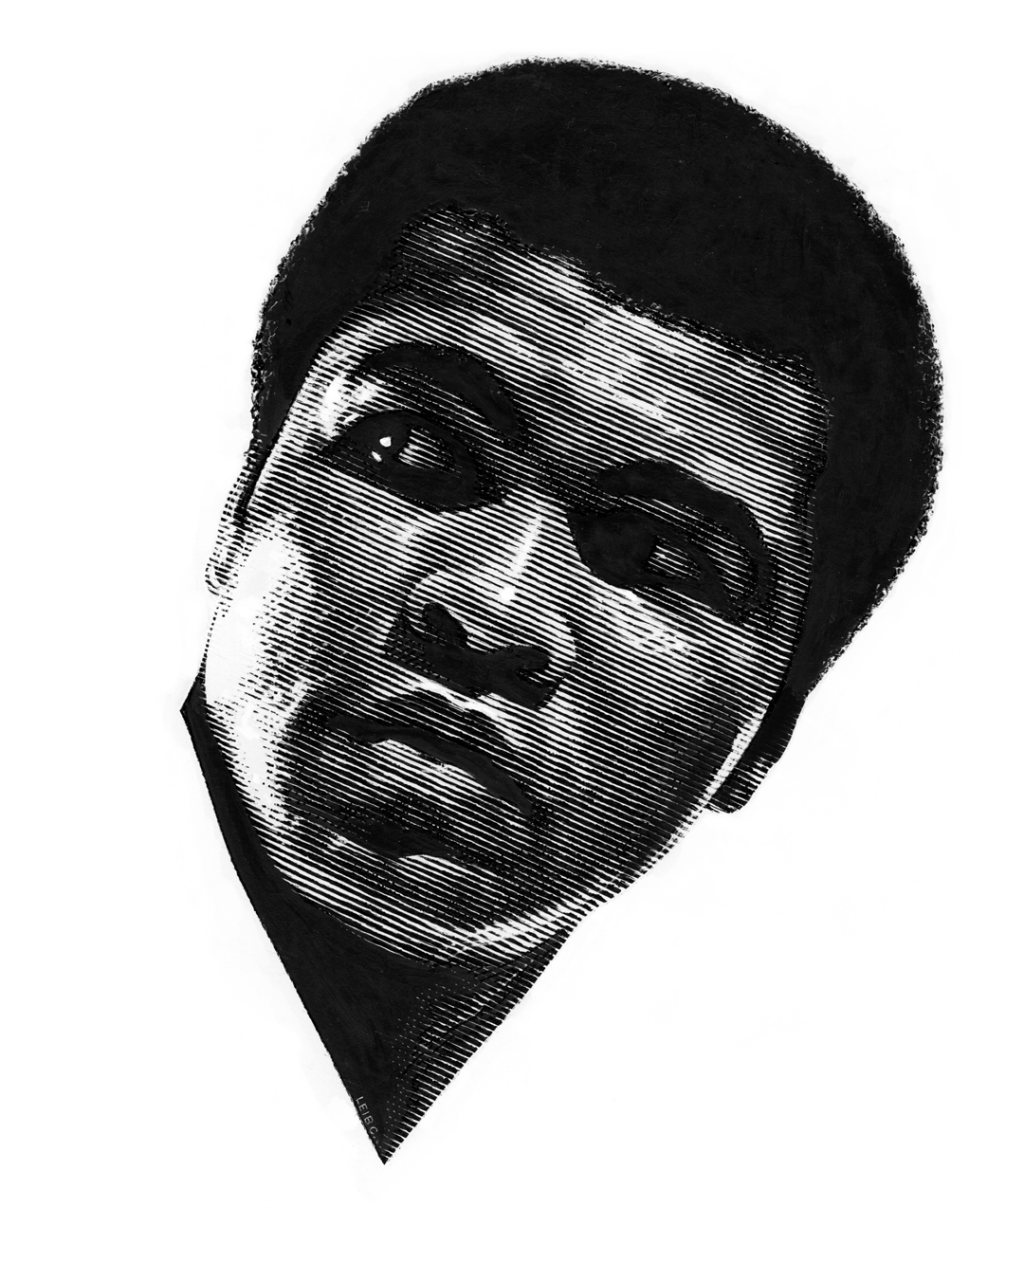 Lot - Muhammad Ali, The Champ, Marker Drawing